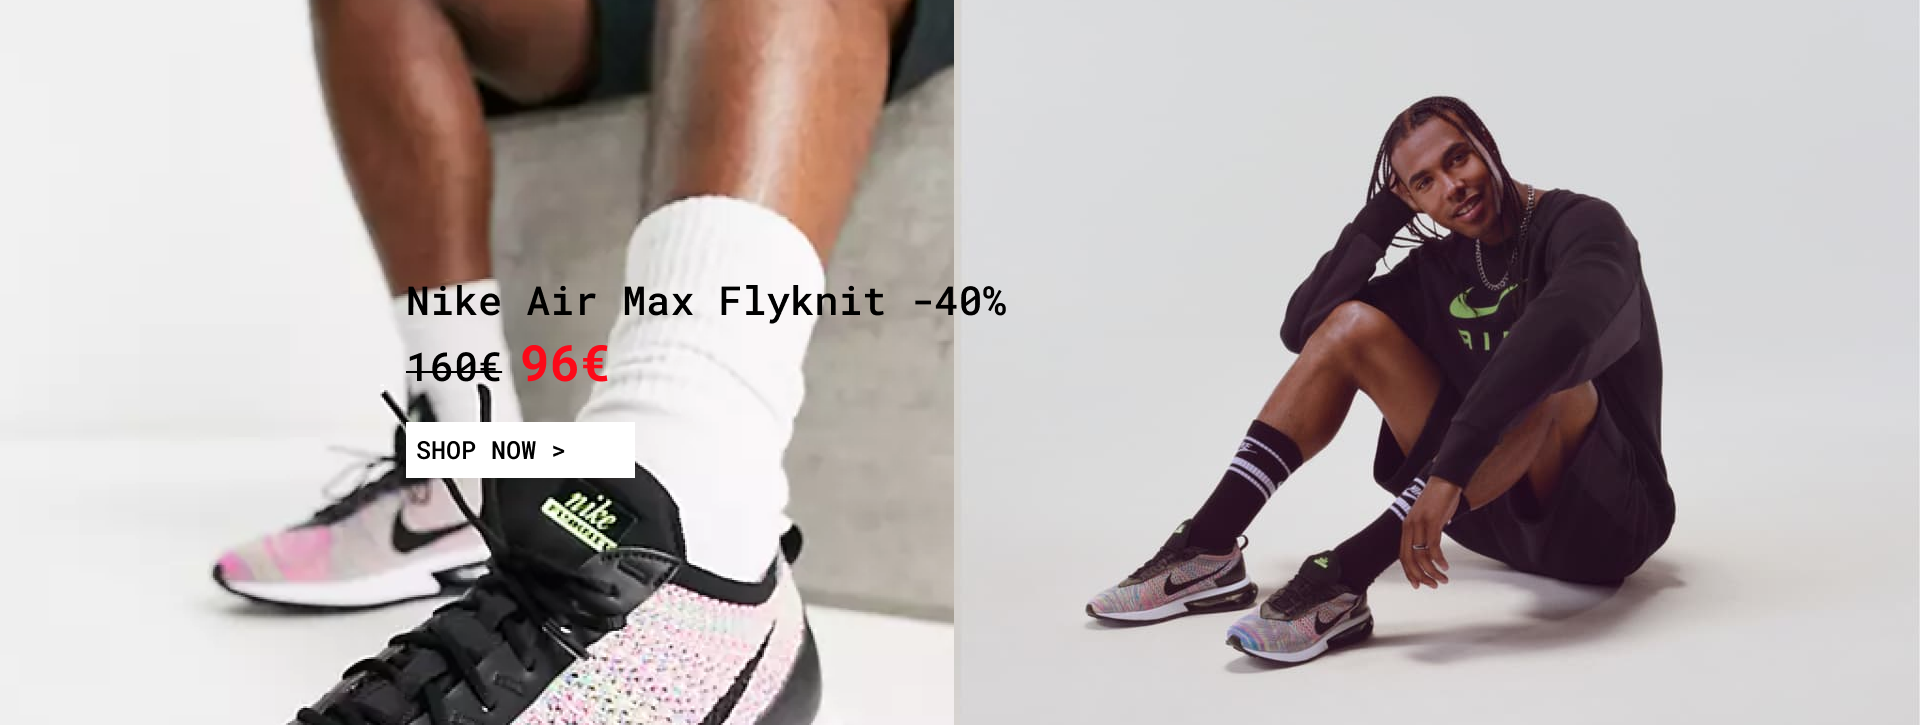 Nike Air Max Flyknit -40%